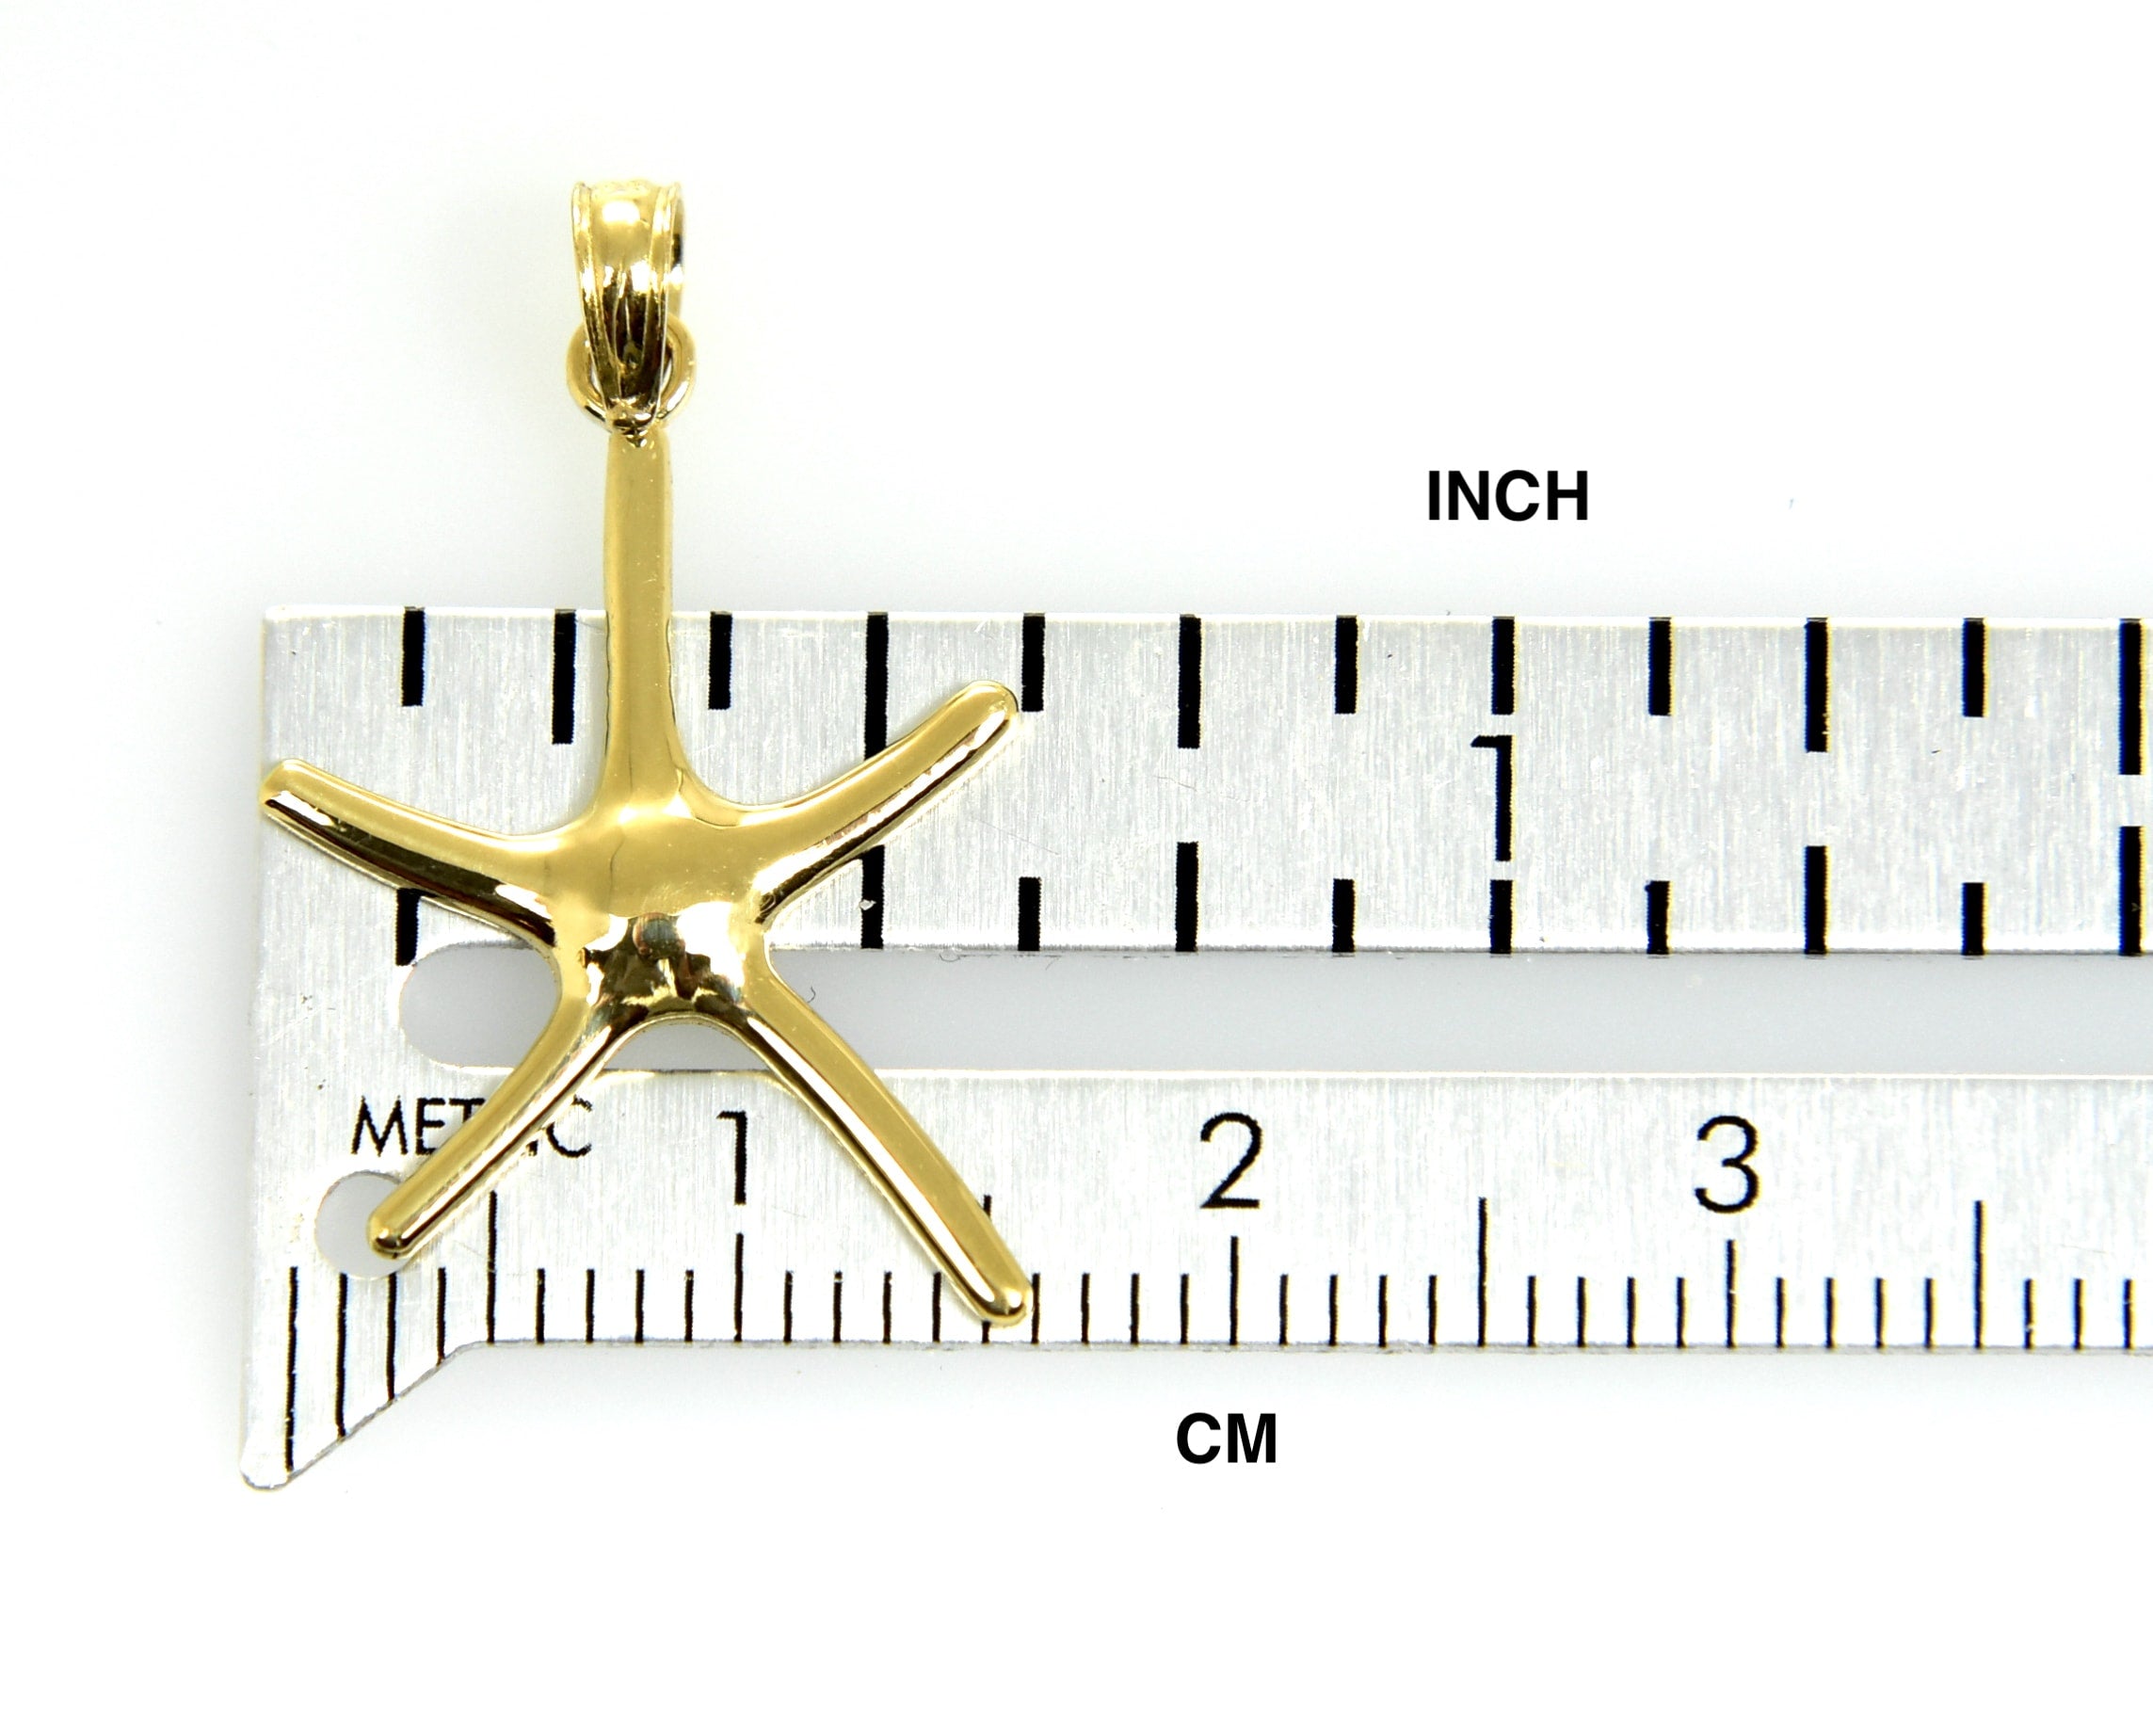 14k Yellow Gold Starfish Pendant Charm